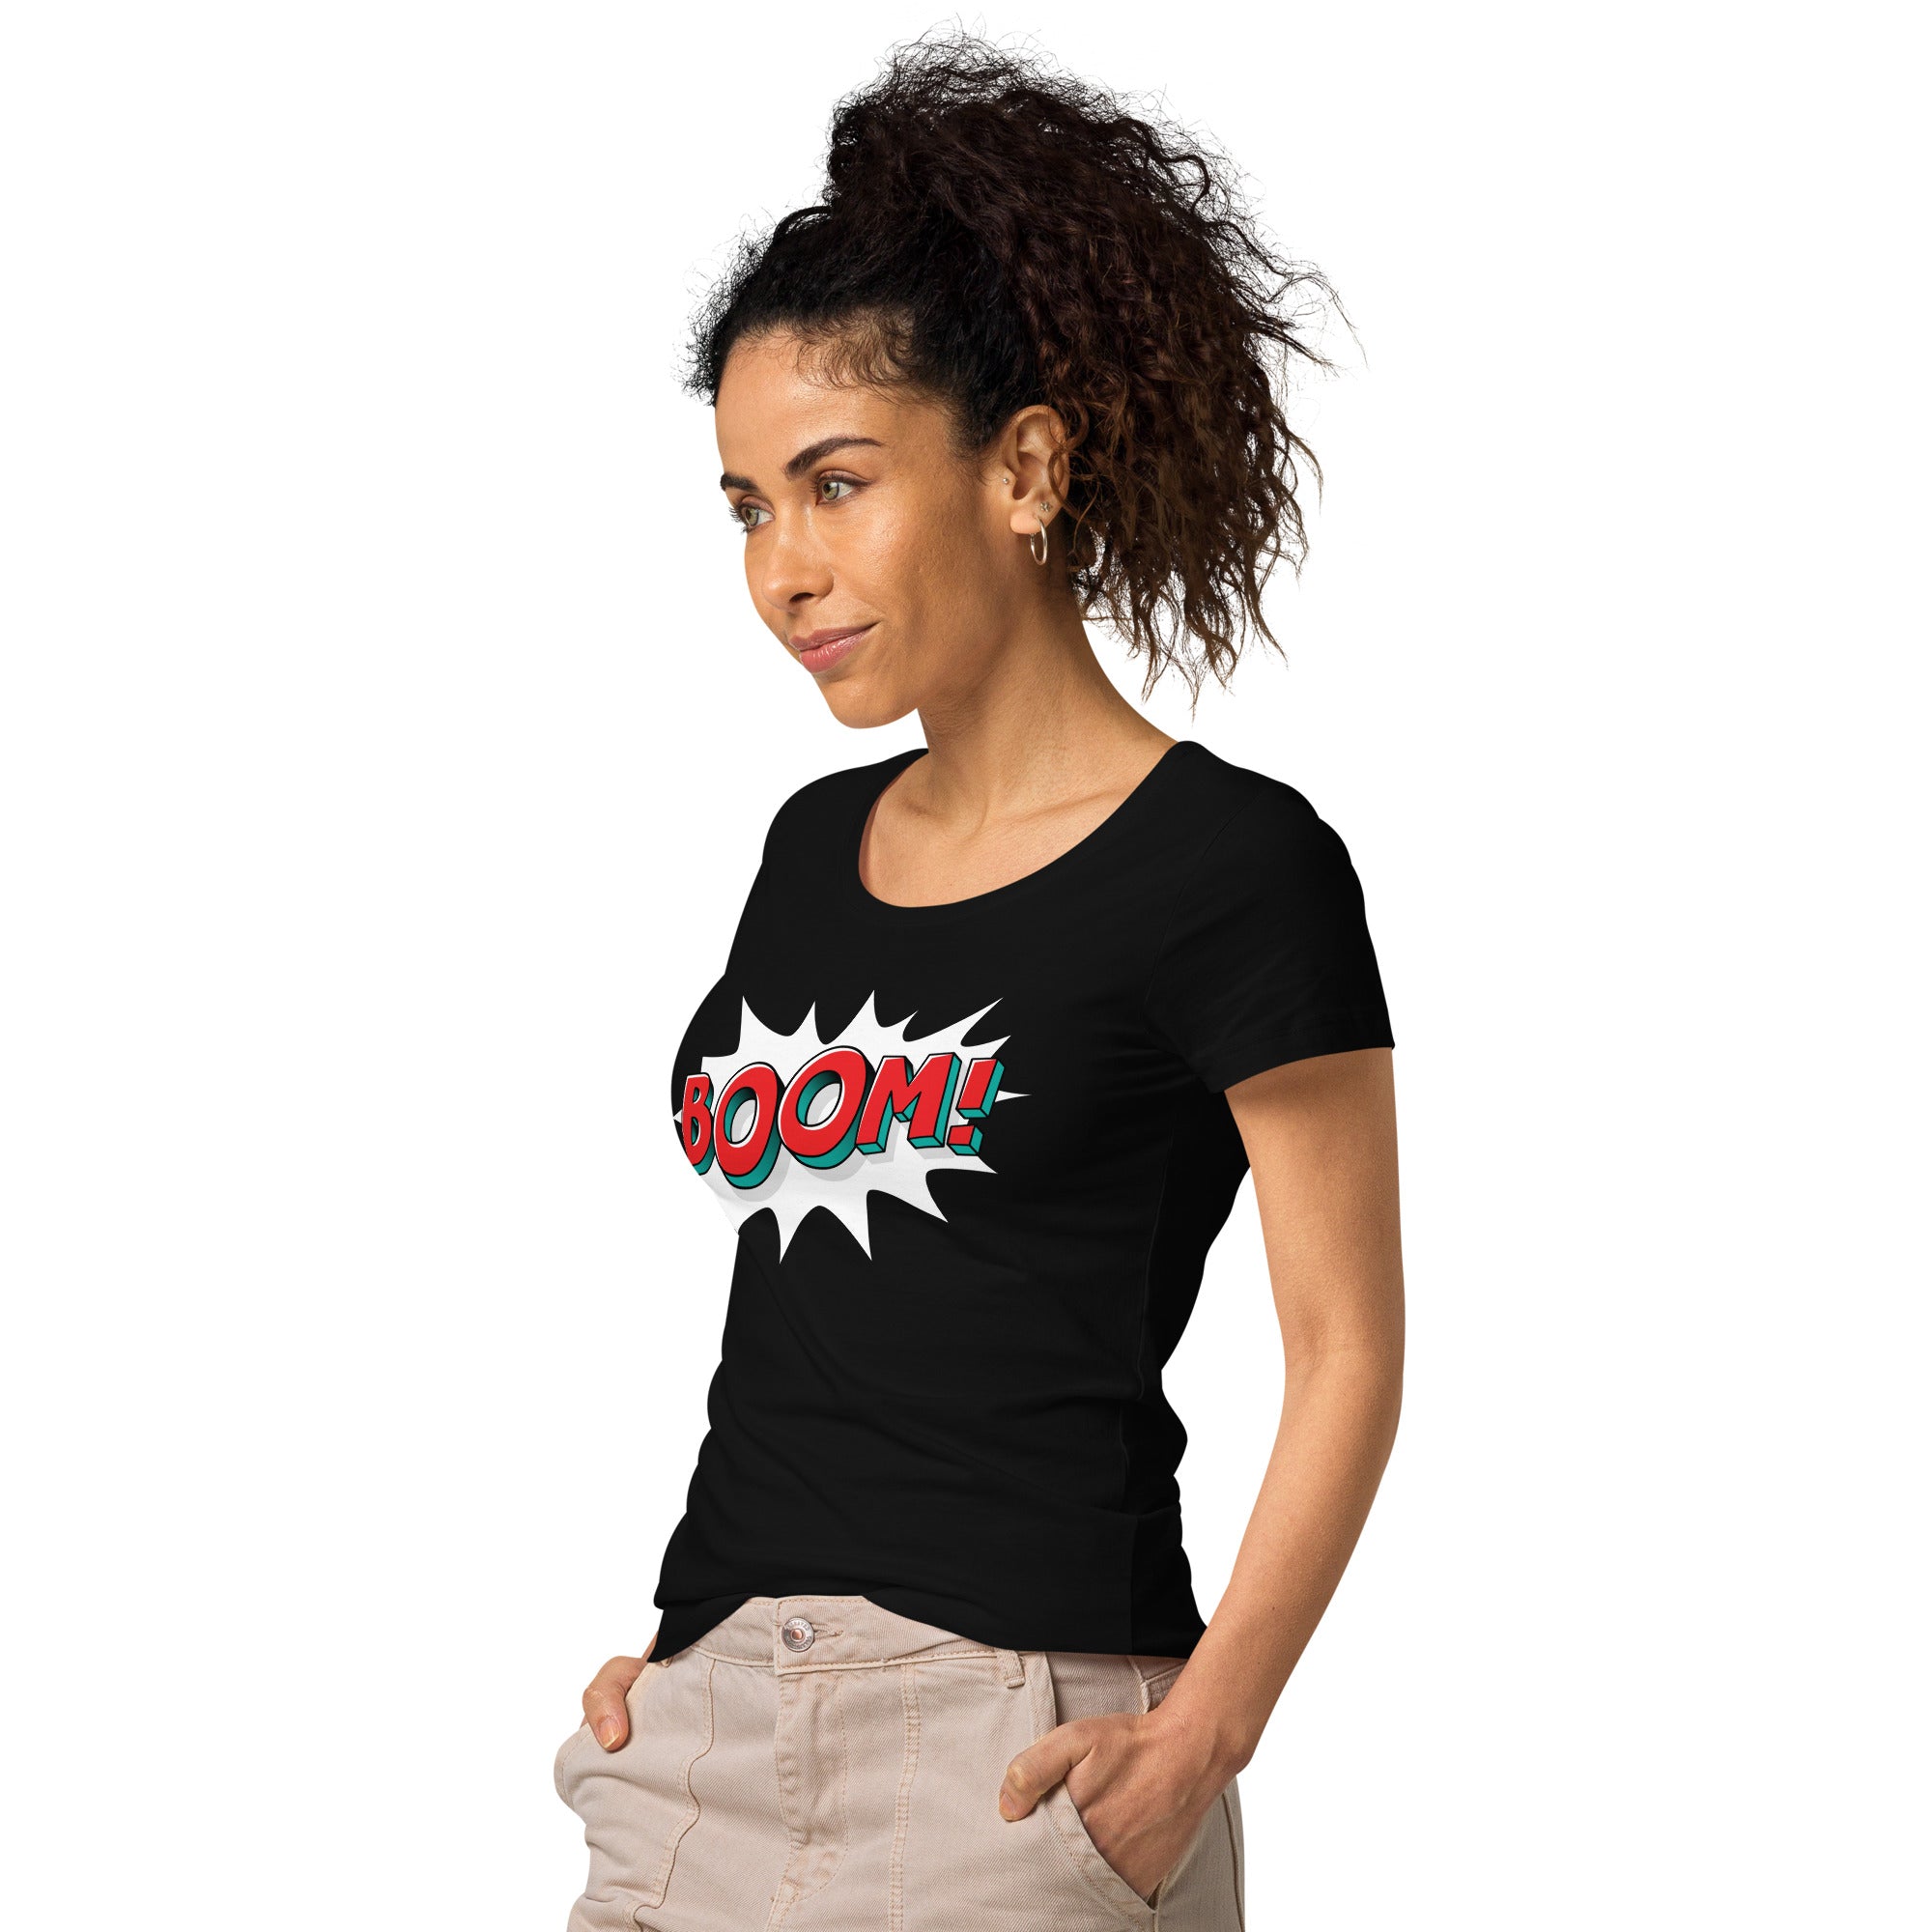 BOOM! Awesomeness Women’s organic t-shirt